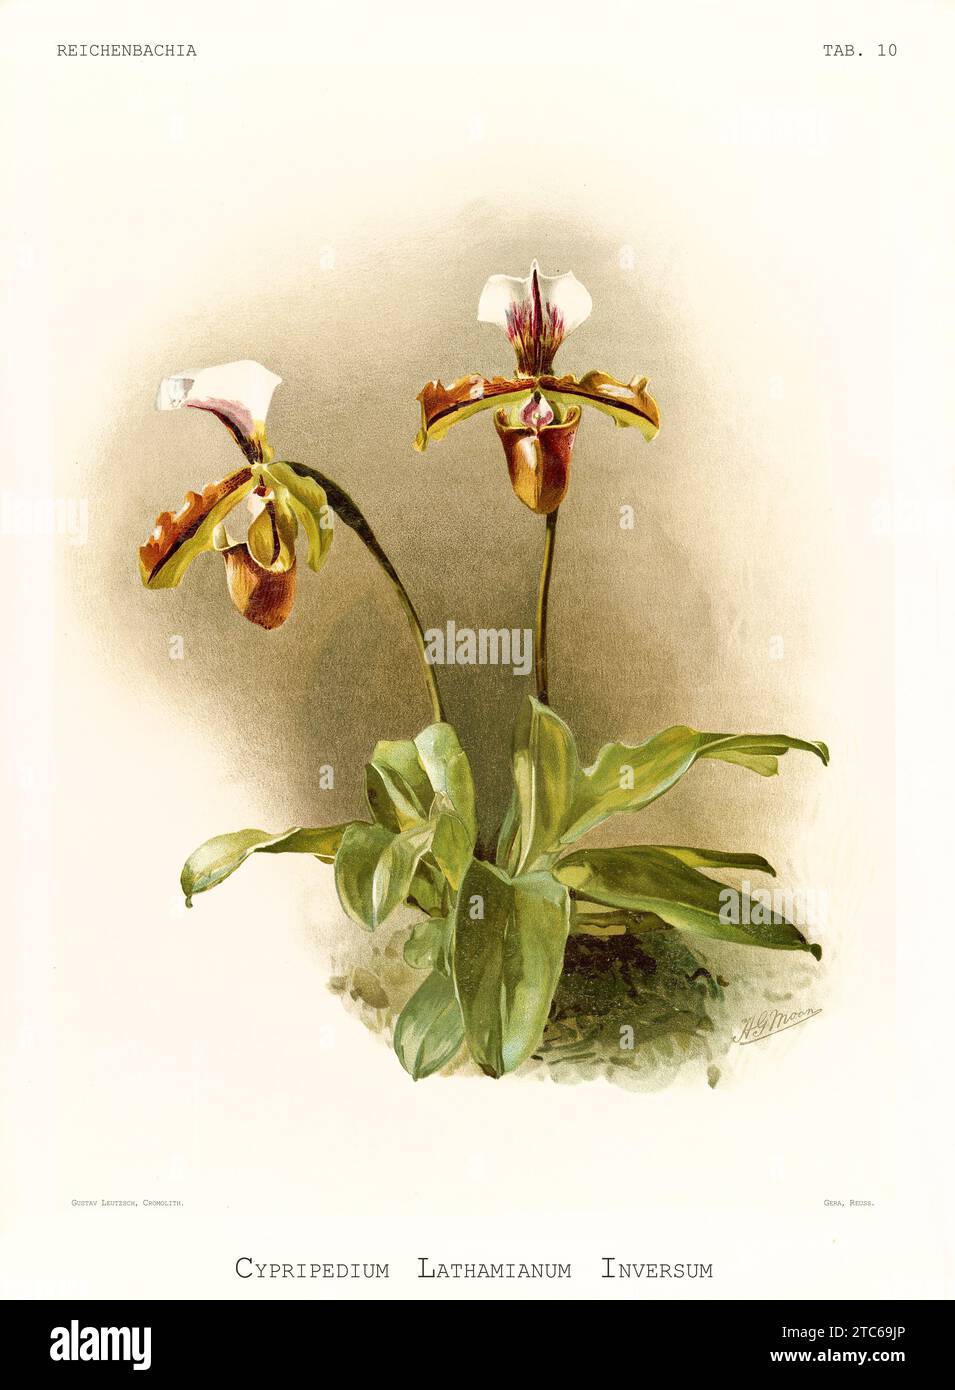 Old illustration of  Cypripedium x lathamii. Reichenbachia, by F. Sander. St. Albans, UK, 1888 - 1894 Stock Photo